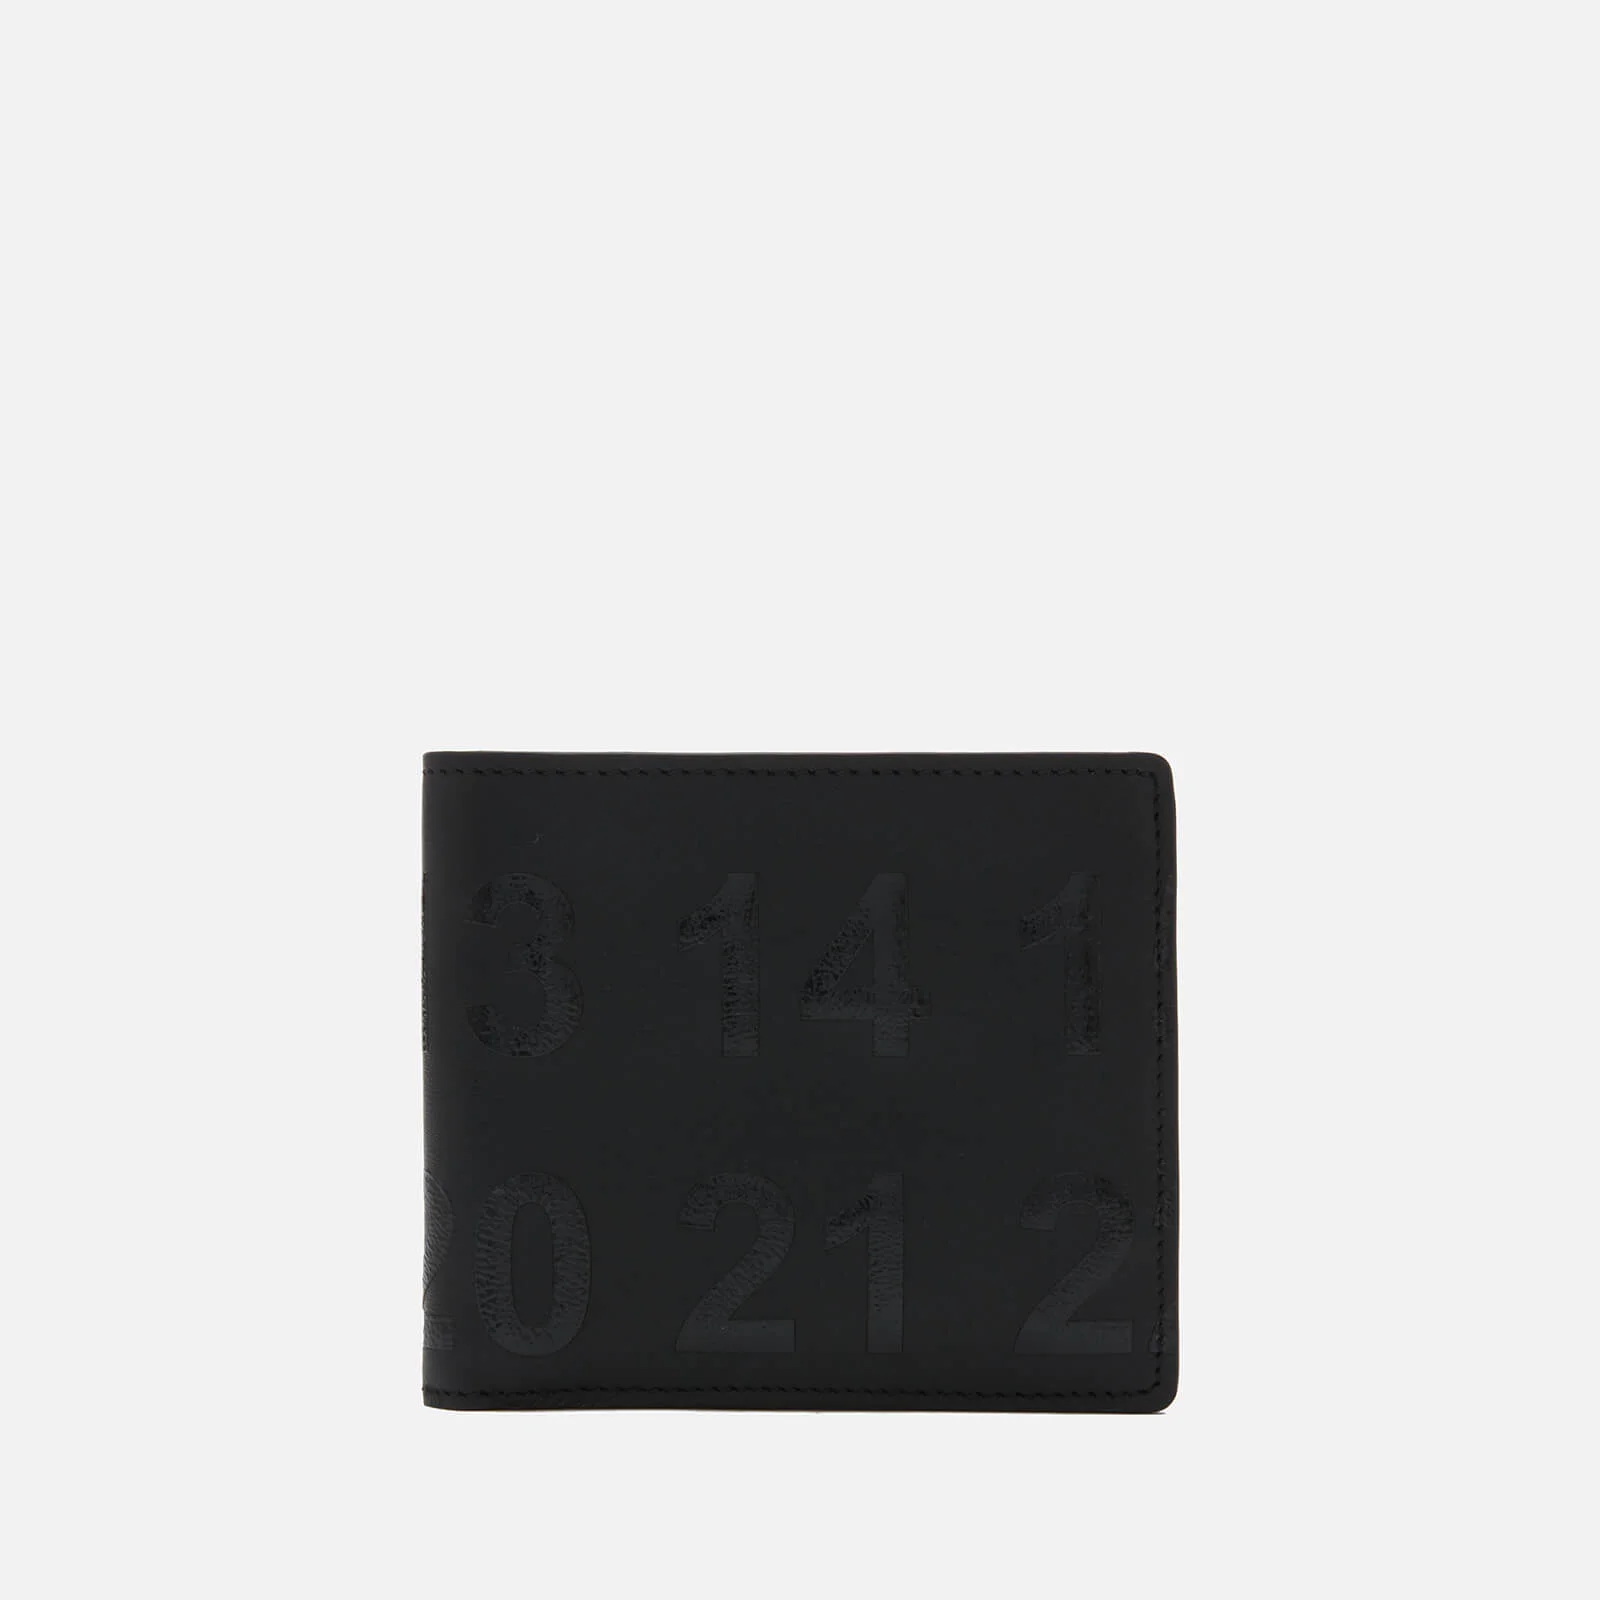 Maison Margiela Men's Logo Leather Bi Fold Wallet - Black Image 1